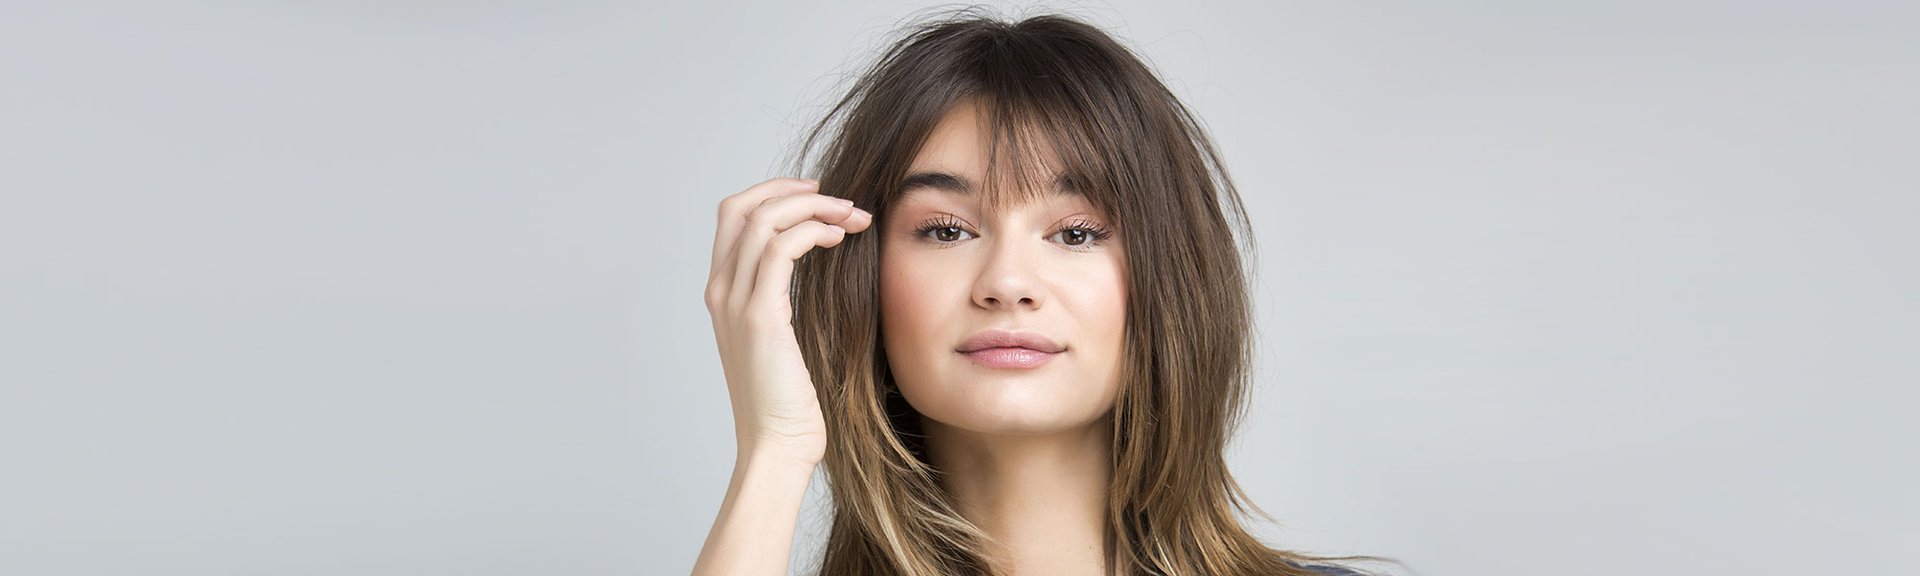 Cordelia segmento Novia Has oído hablar del corte de pelo degrafilado? | L'Oréal Paris